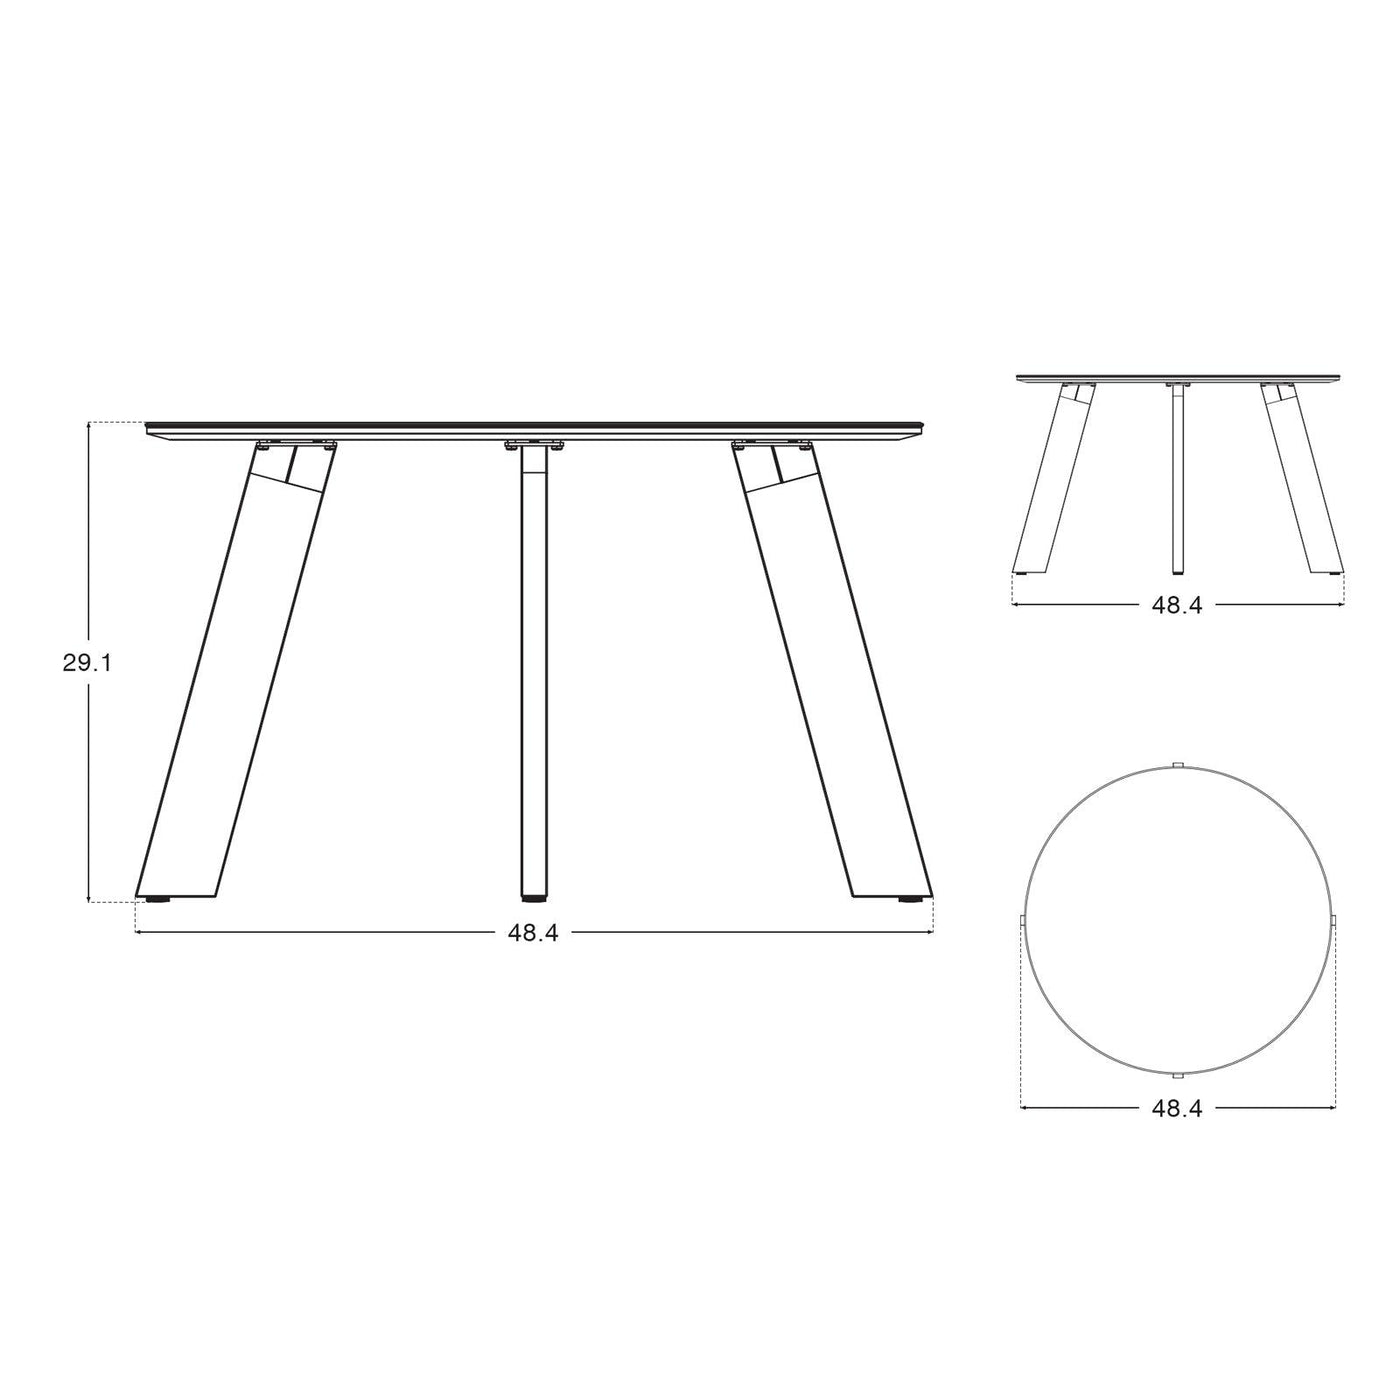 Wonder - Dining Table,Dimension information, Length, height, width data information- Sunsitt Signature